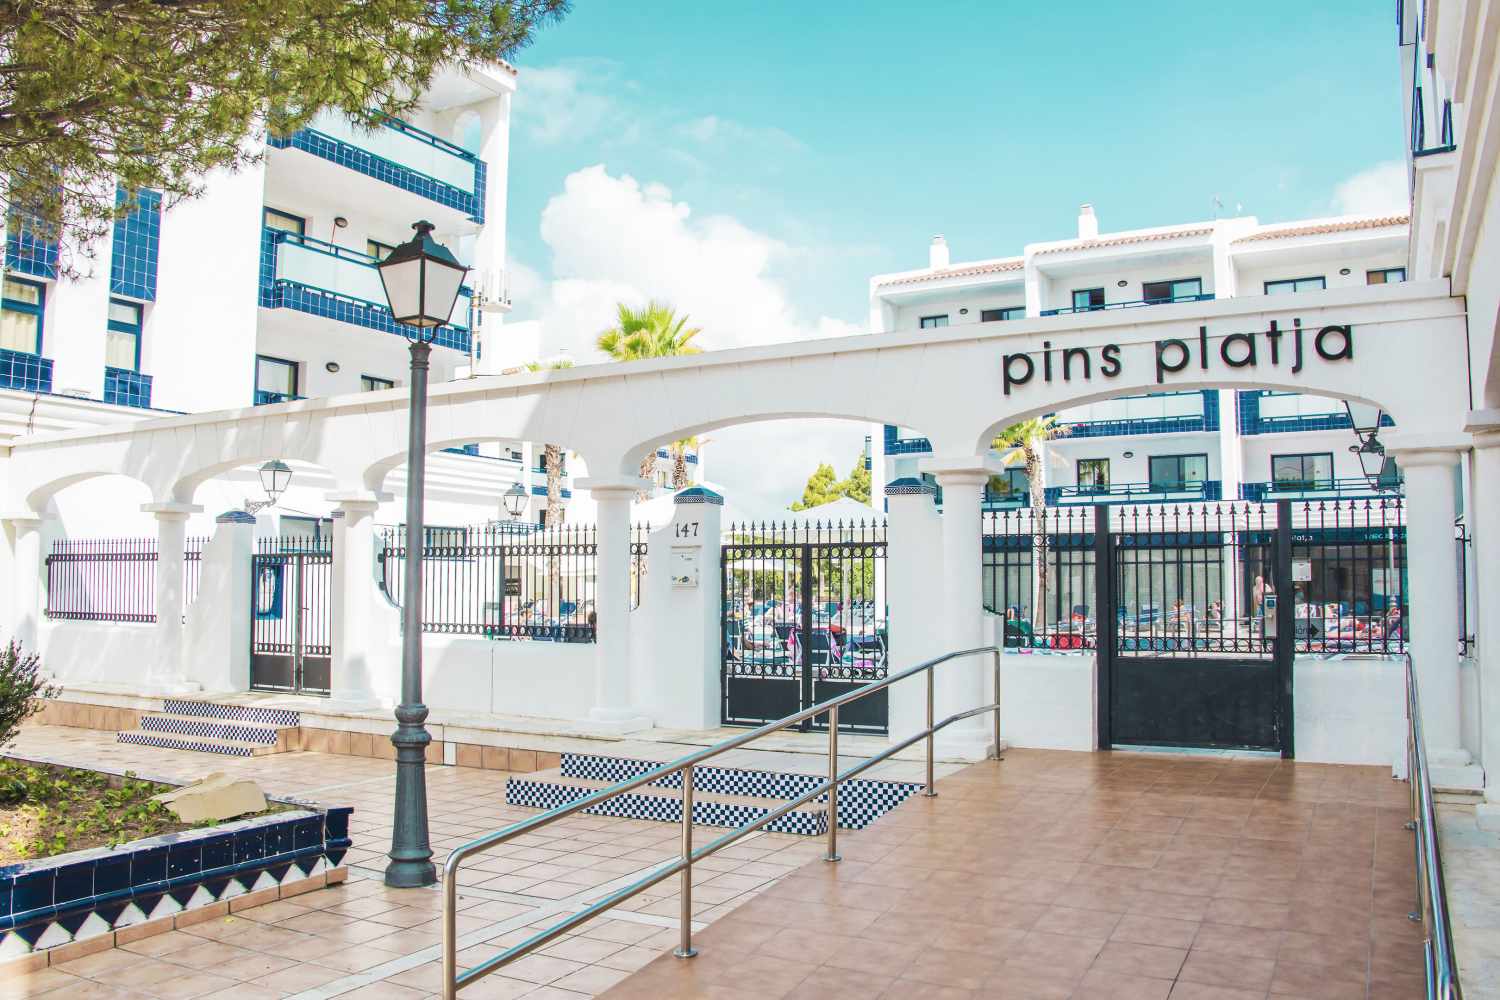 Pins Platja Apartments